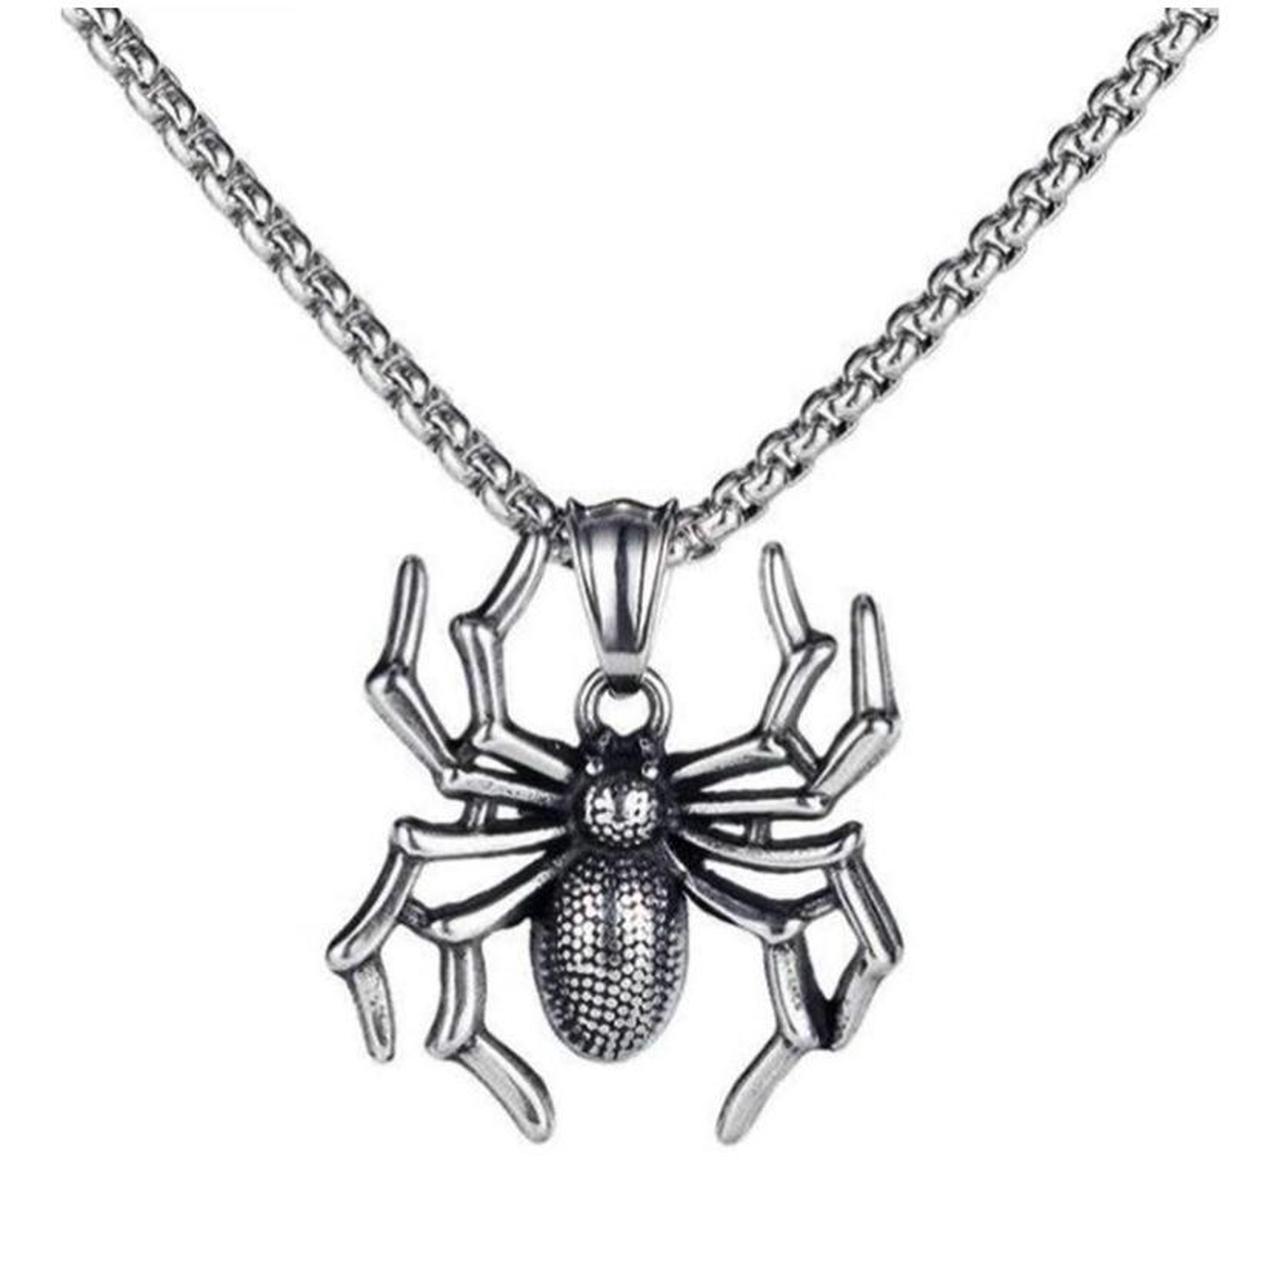 Spider Chain Necklace -Stainless Steel -Chain... - Depop